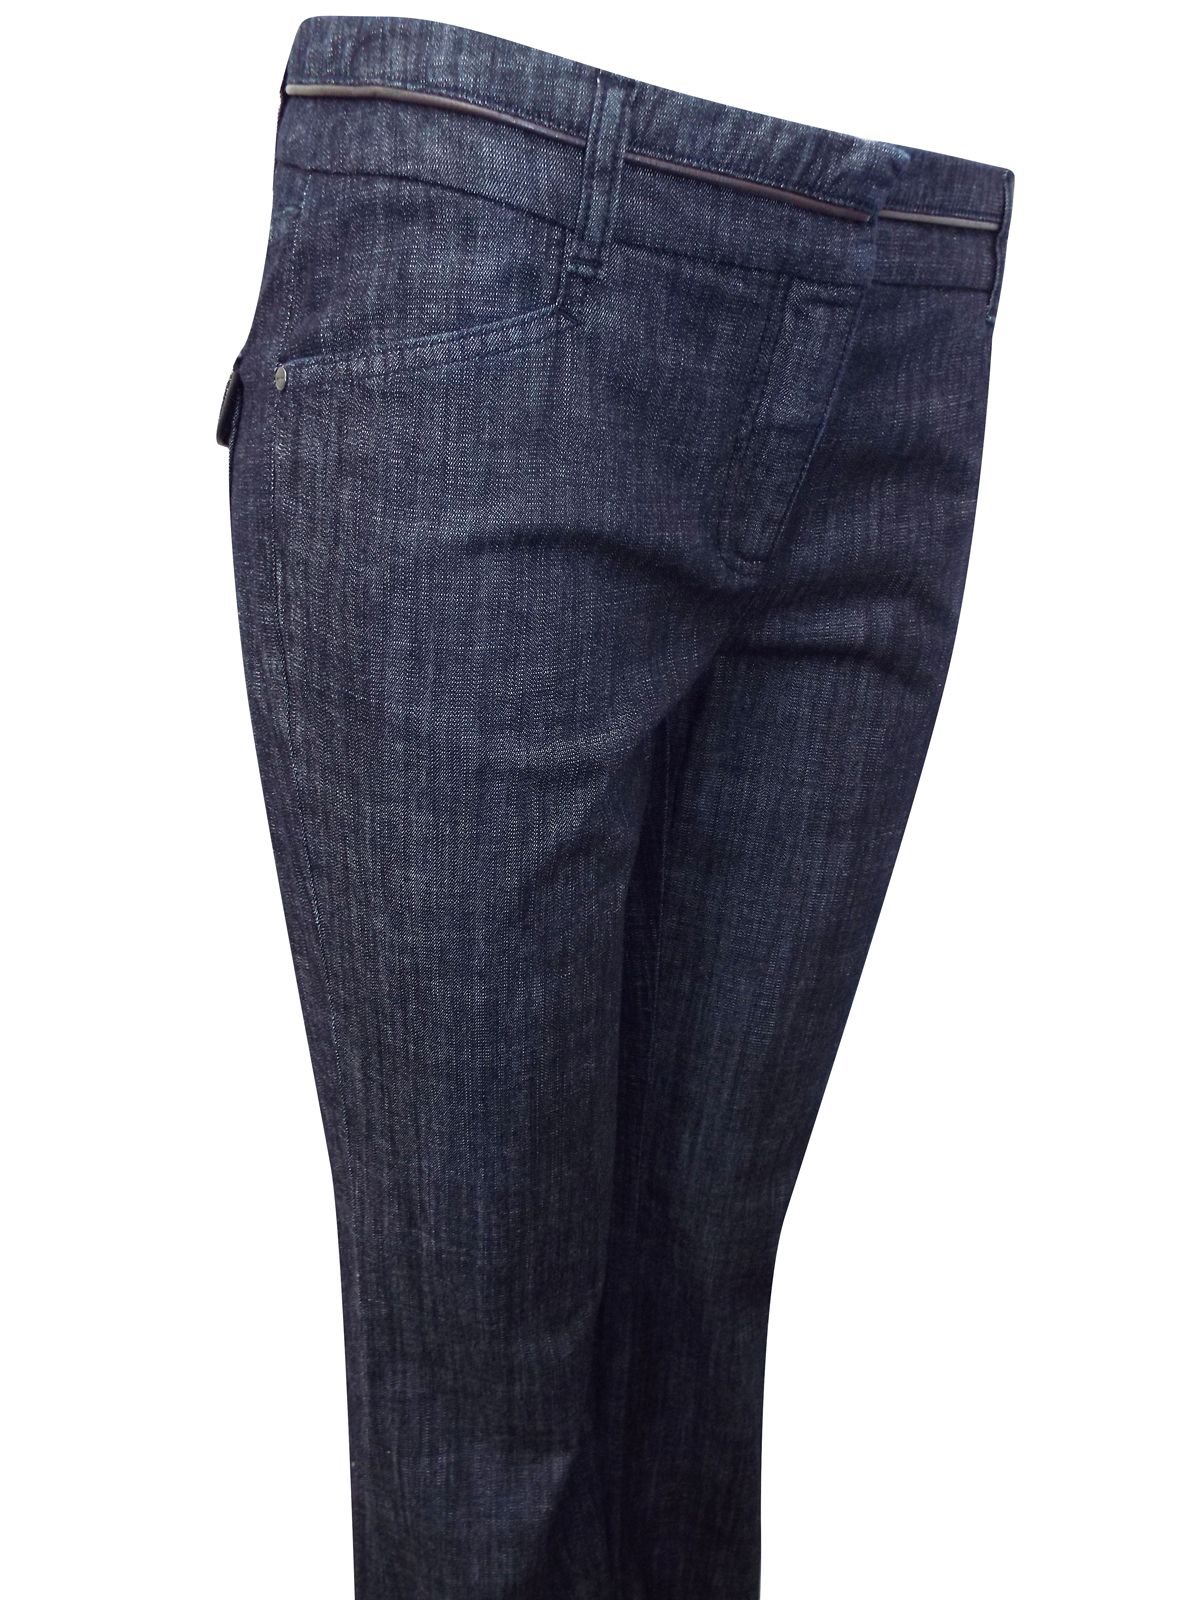 4utograph INDIGO Bootcut Leg Denim Jeans - Size 10 to 16